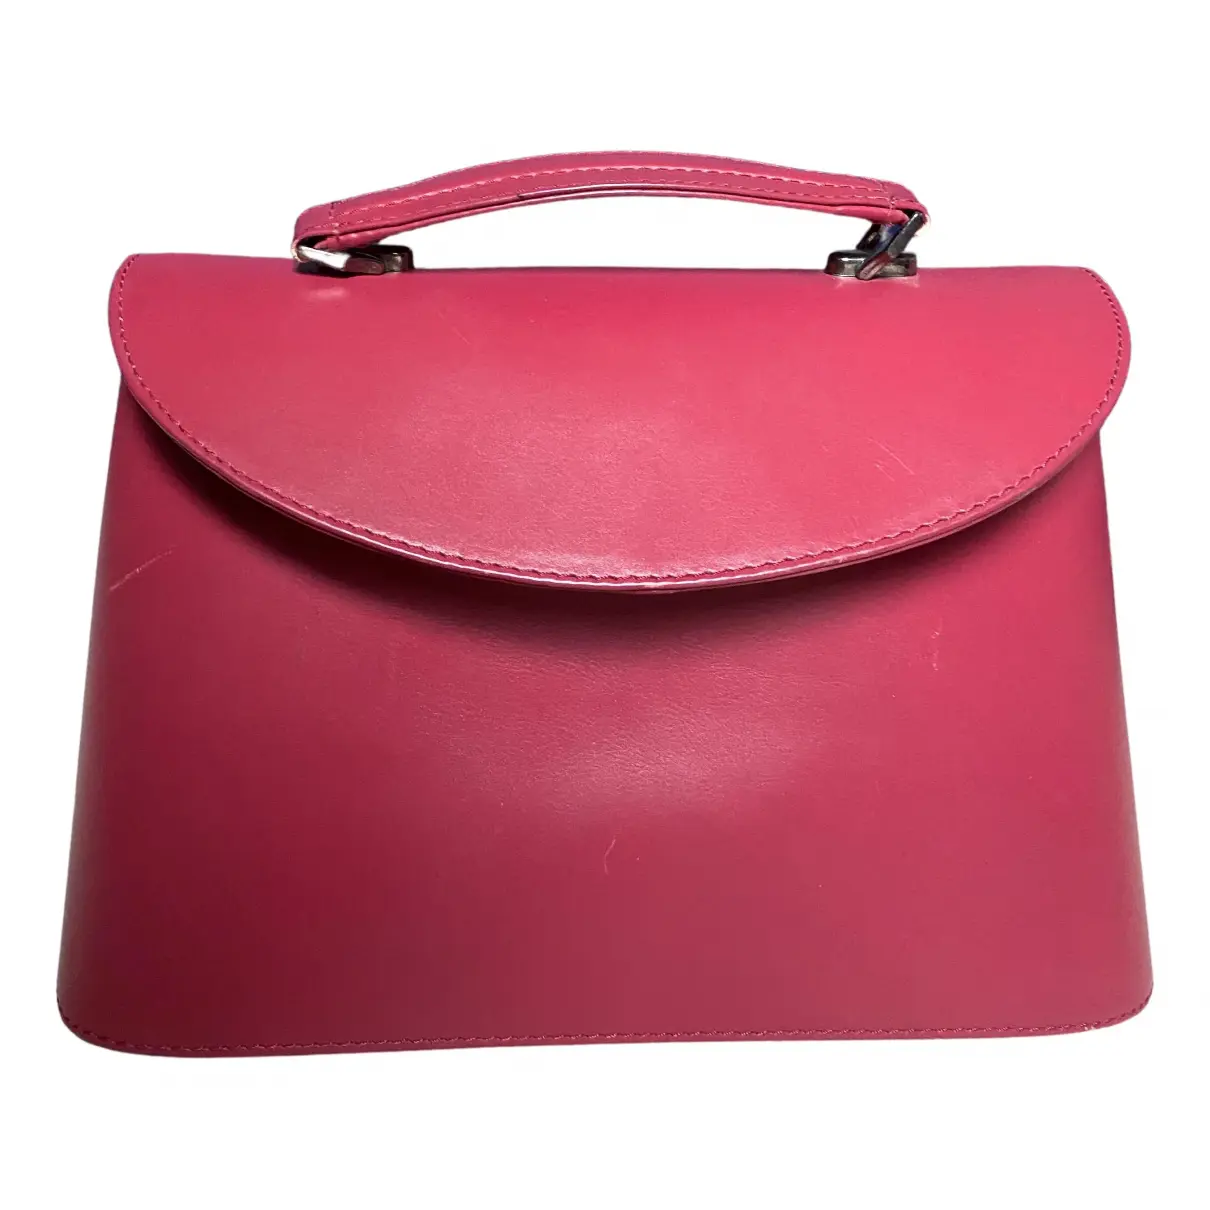 Leather handbag Reiss